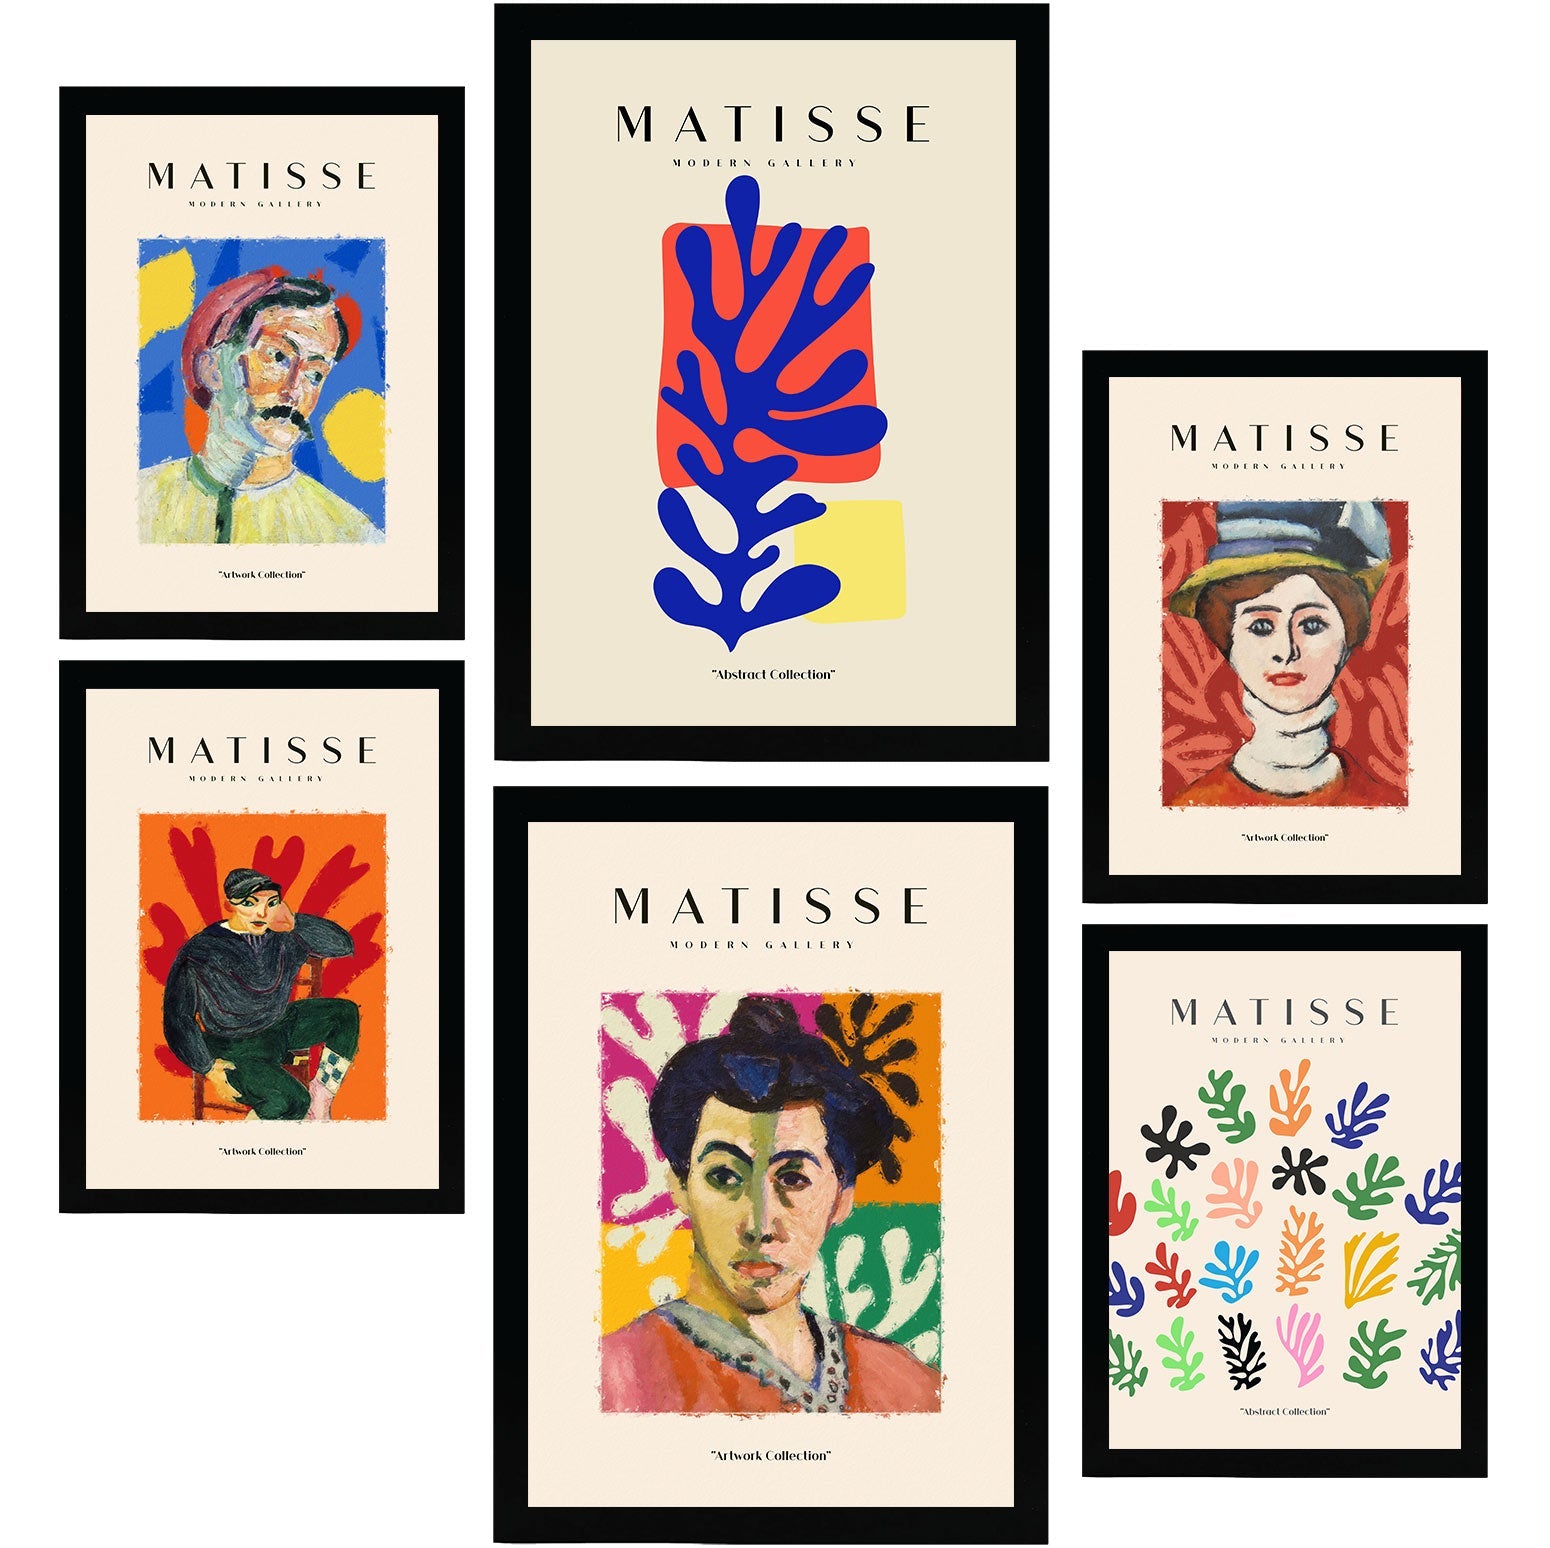 Henri Matisse Posters. Portraits. Abstract Fauvism Art Gallery-Artwork-Nacnic-Nacnic Estudio SL